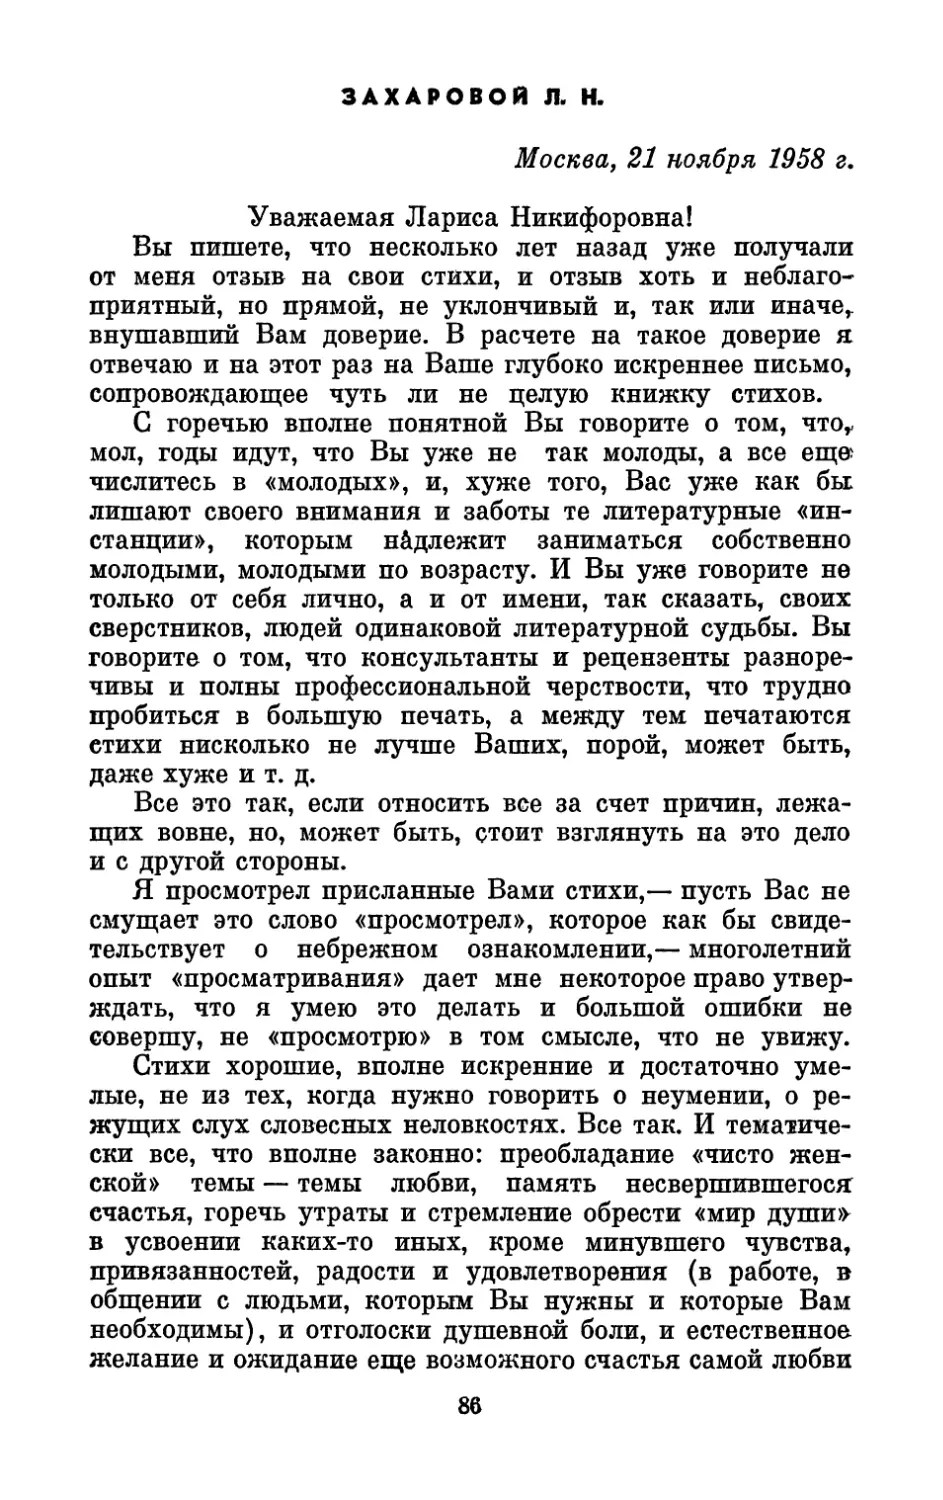 Захаровой Л. Н., 21 ноября 1958 г.